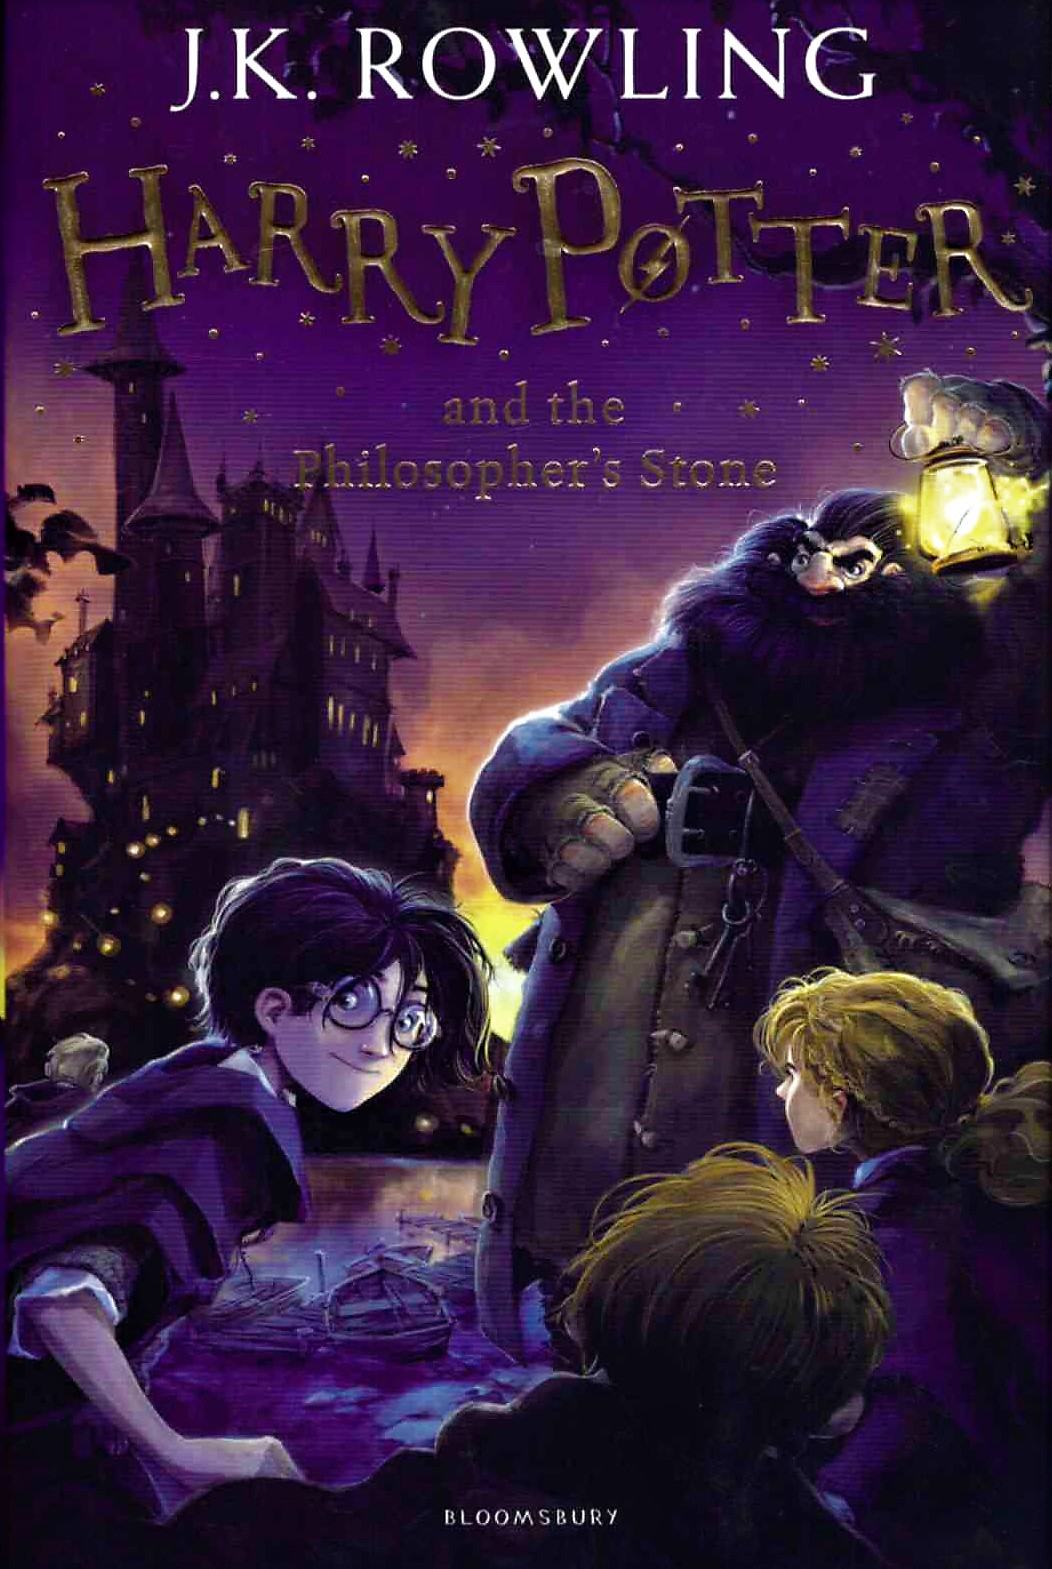 Harry Potter and the Philosopher's Stone Hardback / Философский камень